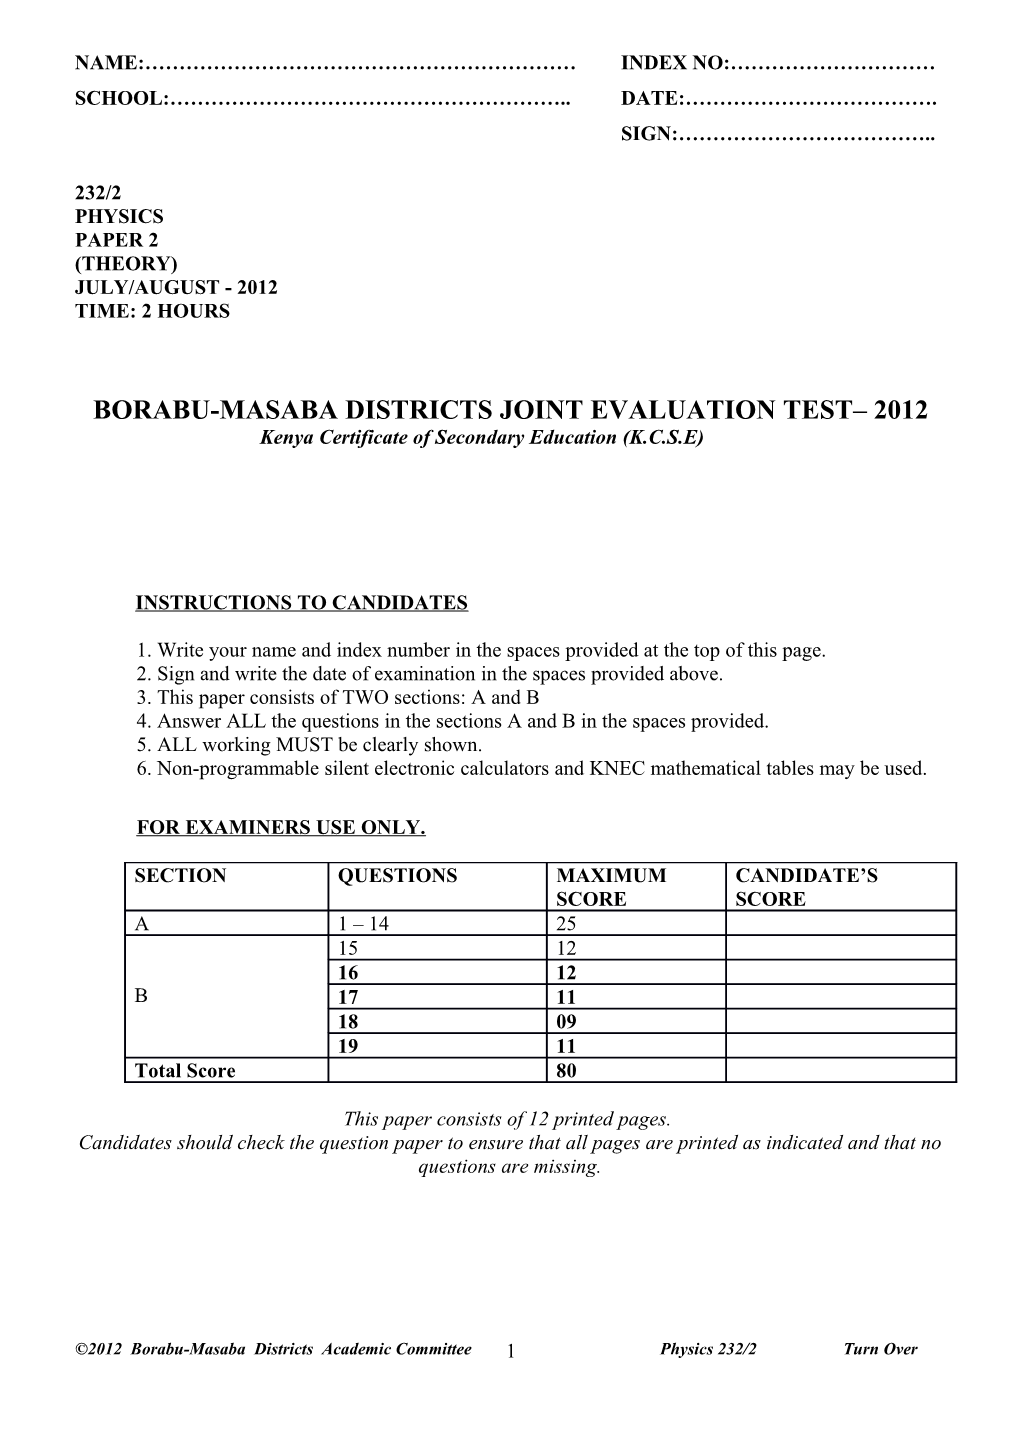 Borabu-Masaba Districts Joint Evaluation Test 2012